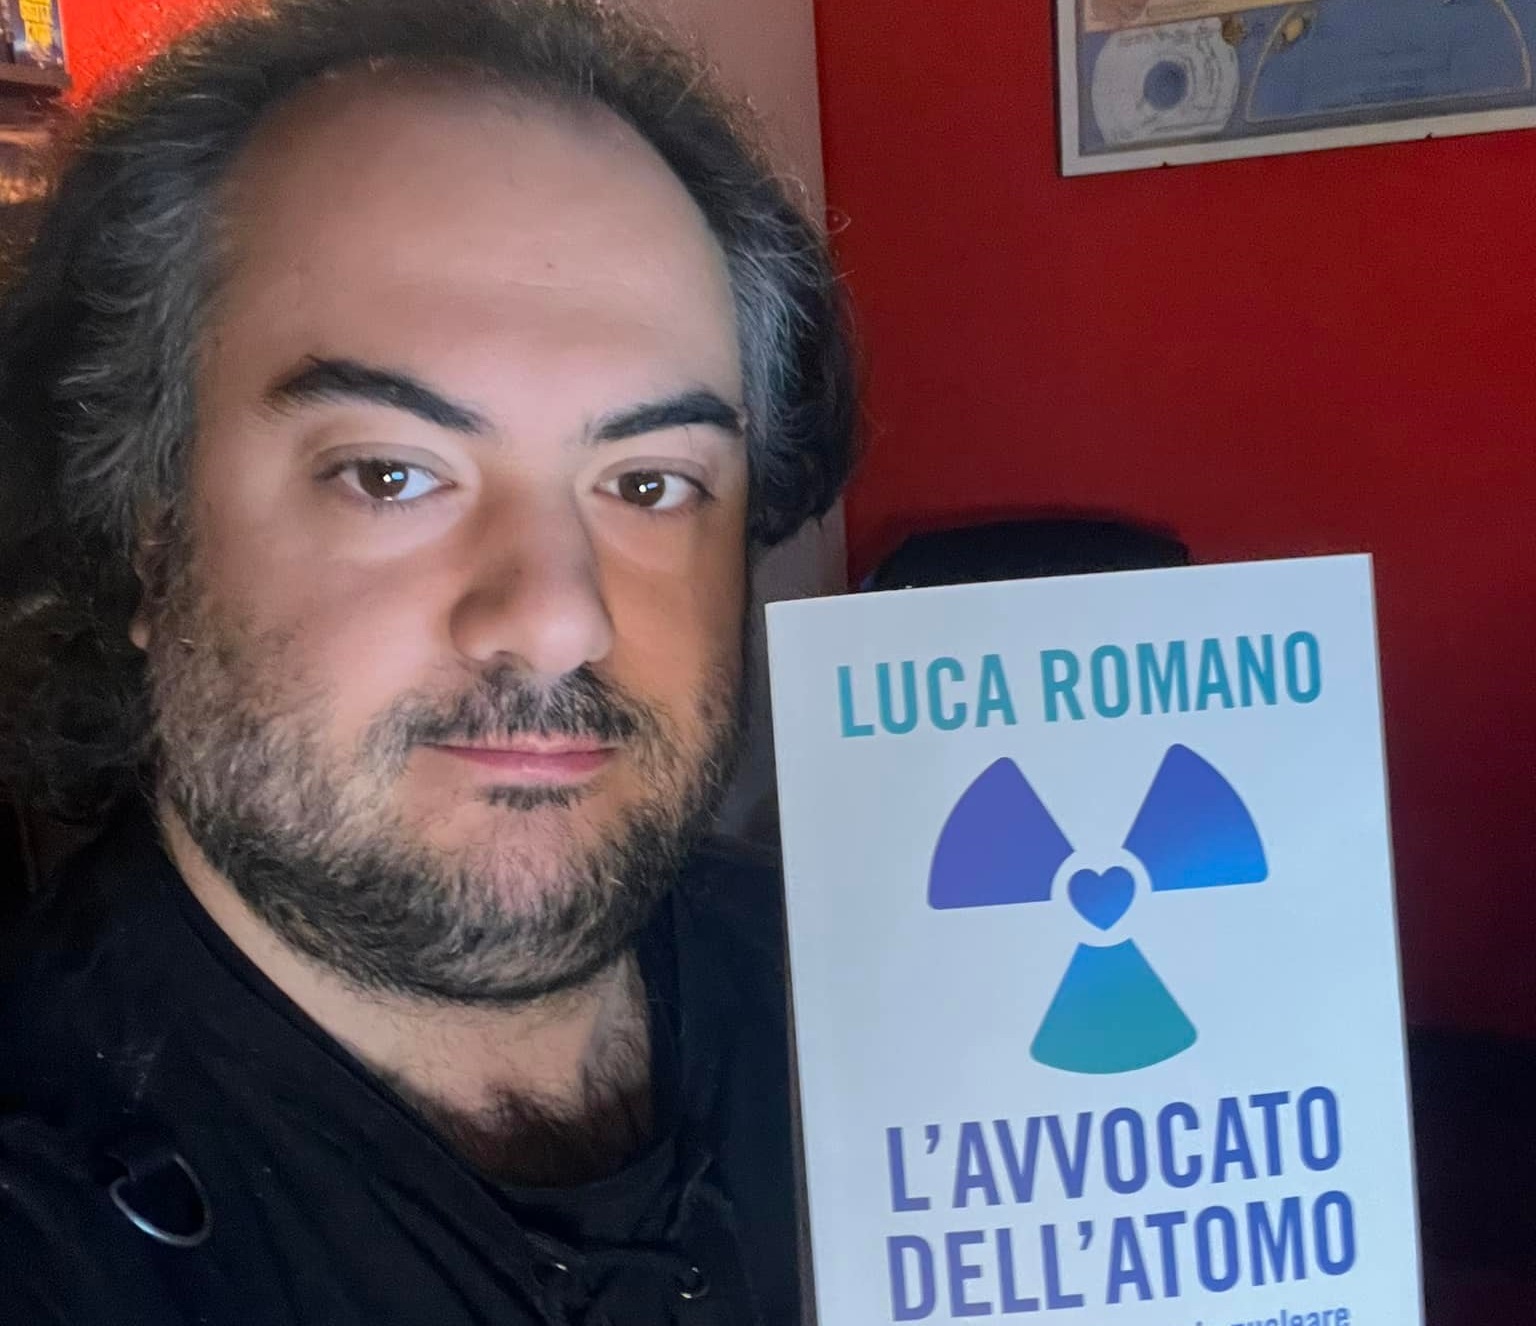 Luca-Romano-Avvocato-dell-Atomo.jpg